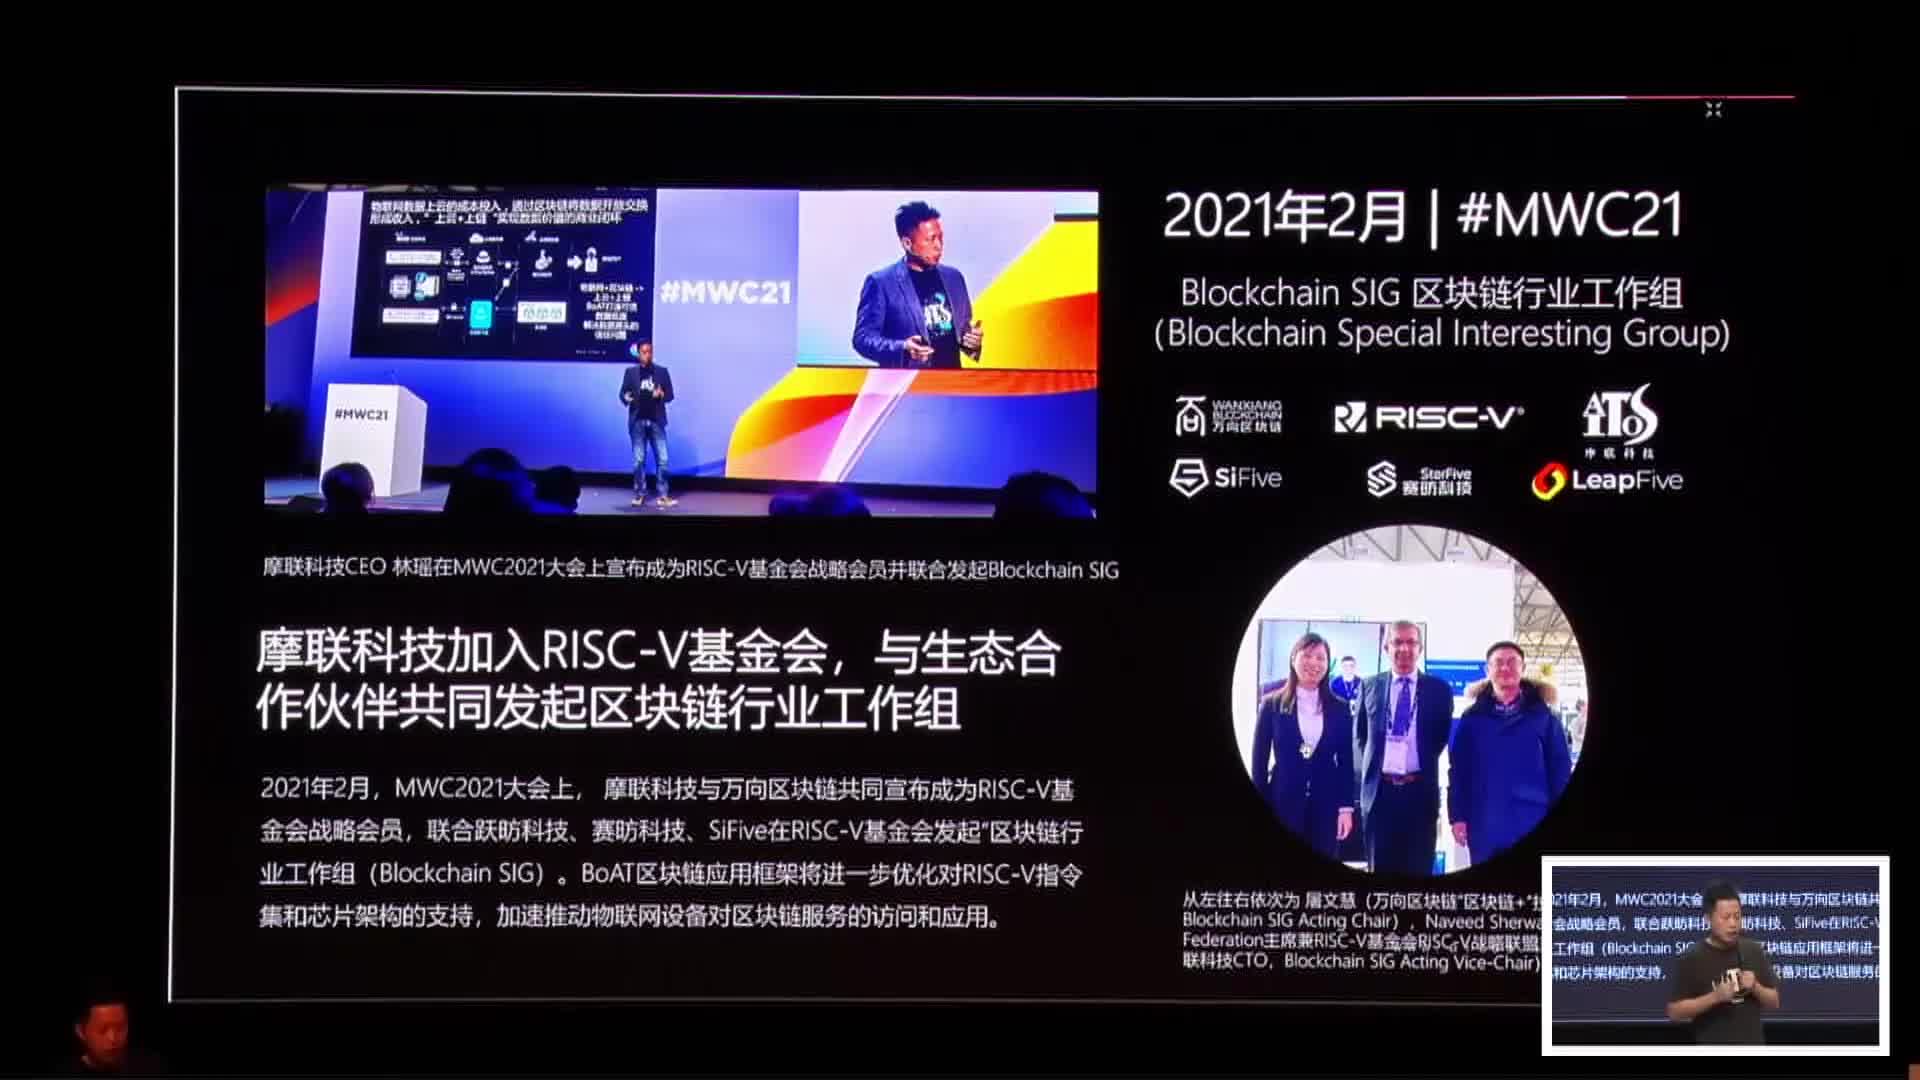 BoAT-V 区块链应用框架赋能可信物联网数字底座 - 林瑶@摩联科技 - 第一届 RISC-V 中国峰会2